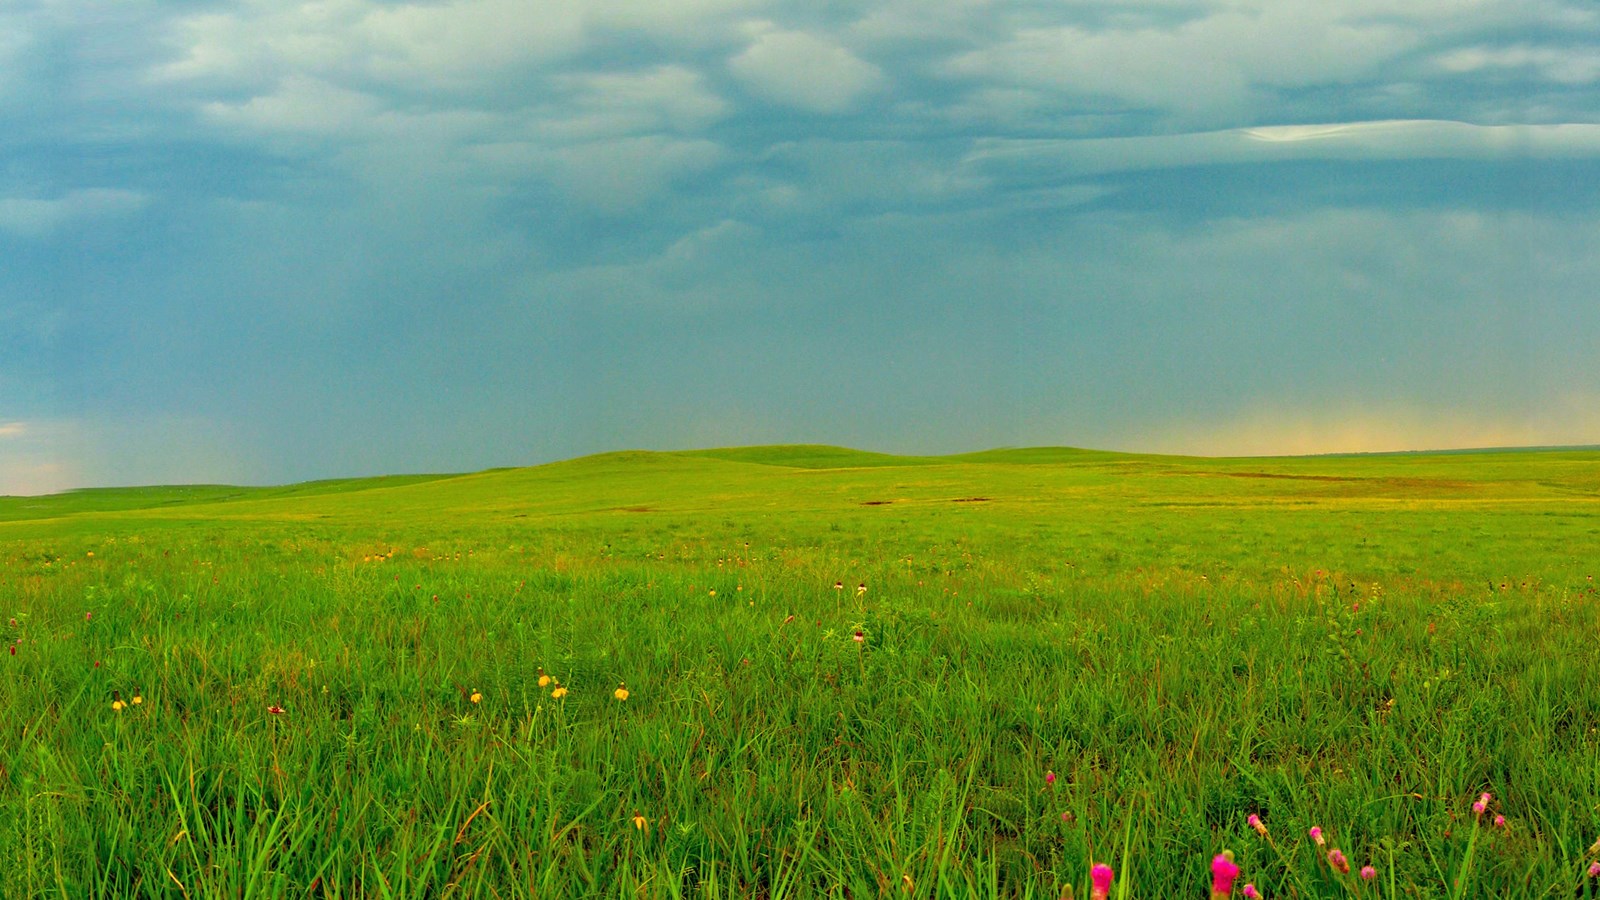 An expansive tallgrass prairie with summer flowers, under a stormy sky.